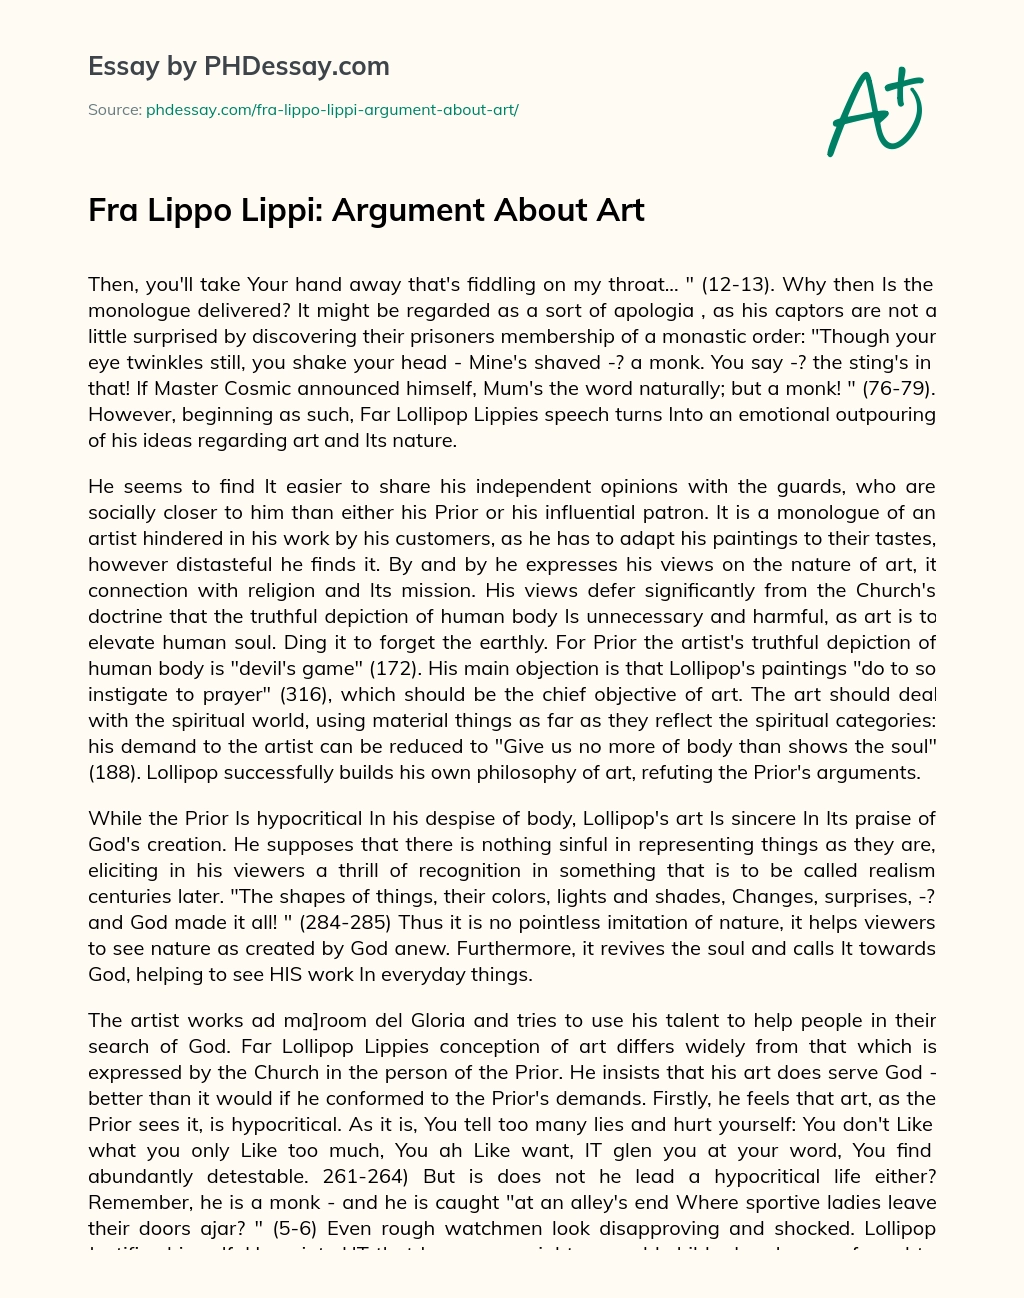 Fra Lippo Lippi: Argument About Art essay